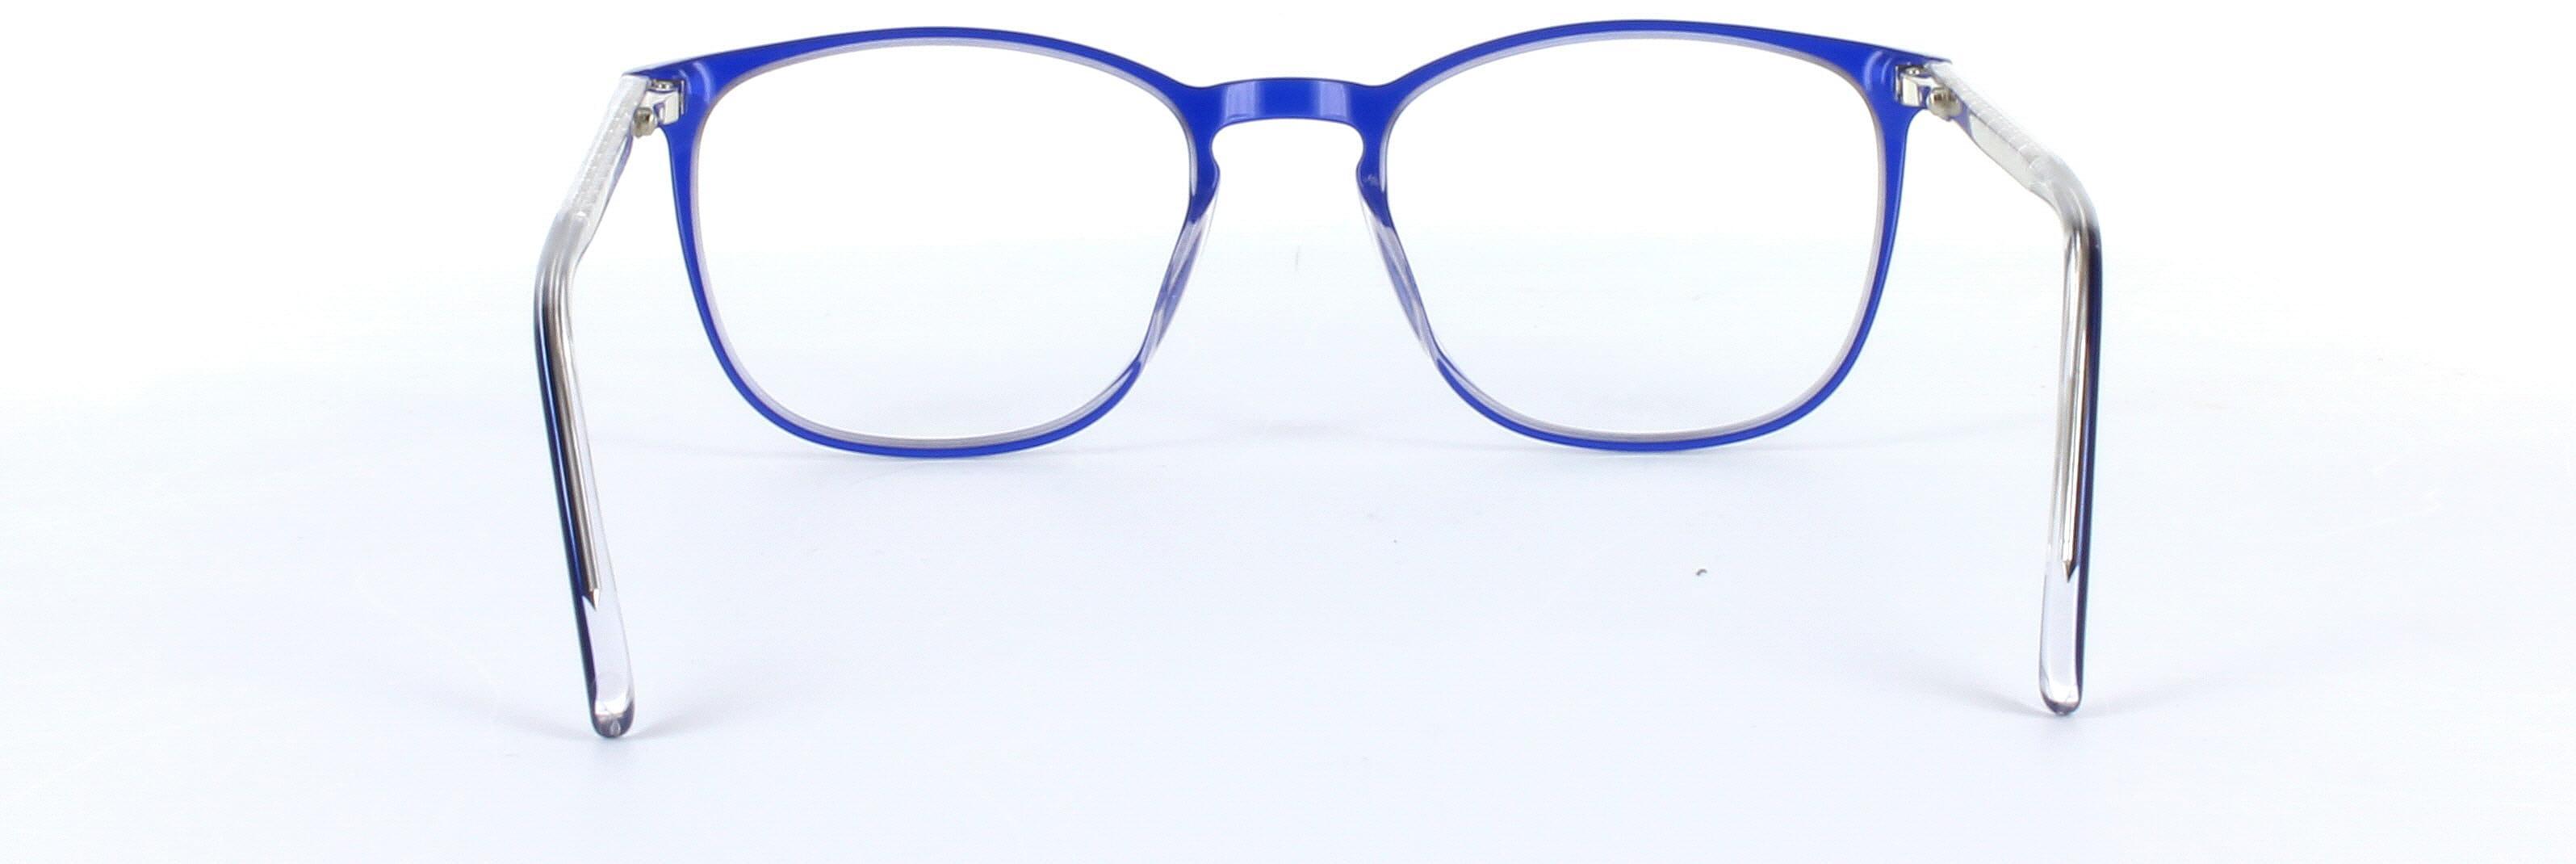 Mariana Blue Full Rim Round Plastic Glasses - Image View 3